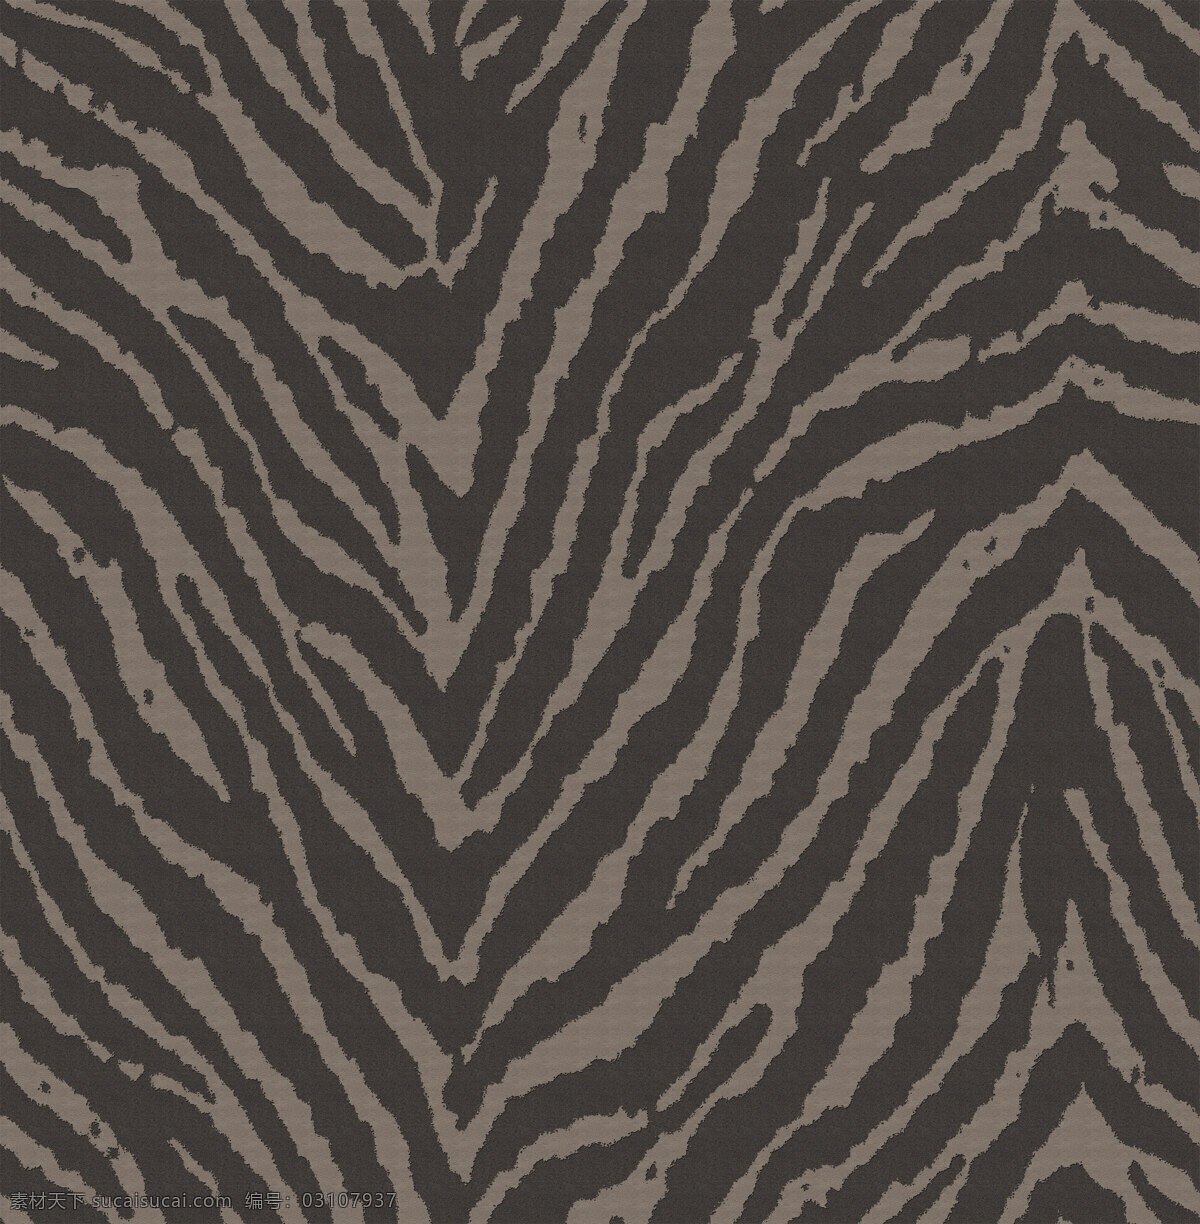 vray 地毯 材质 斑马纹 布料 褐色 有贴图 max2008 3d模型素材 材质贴图